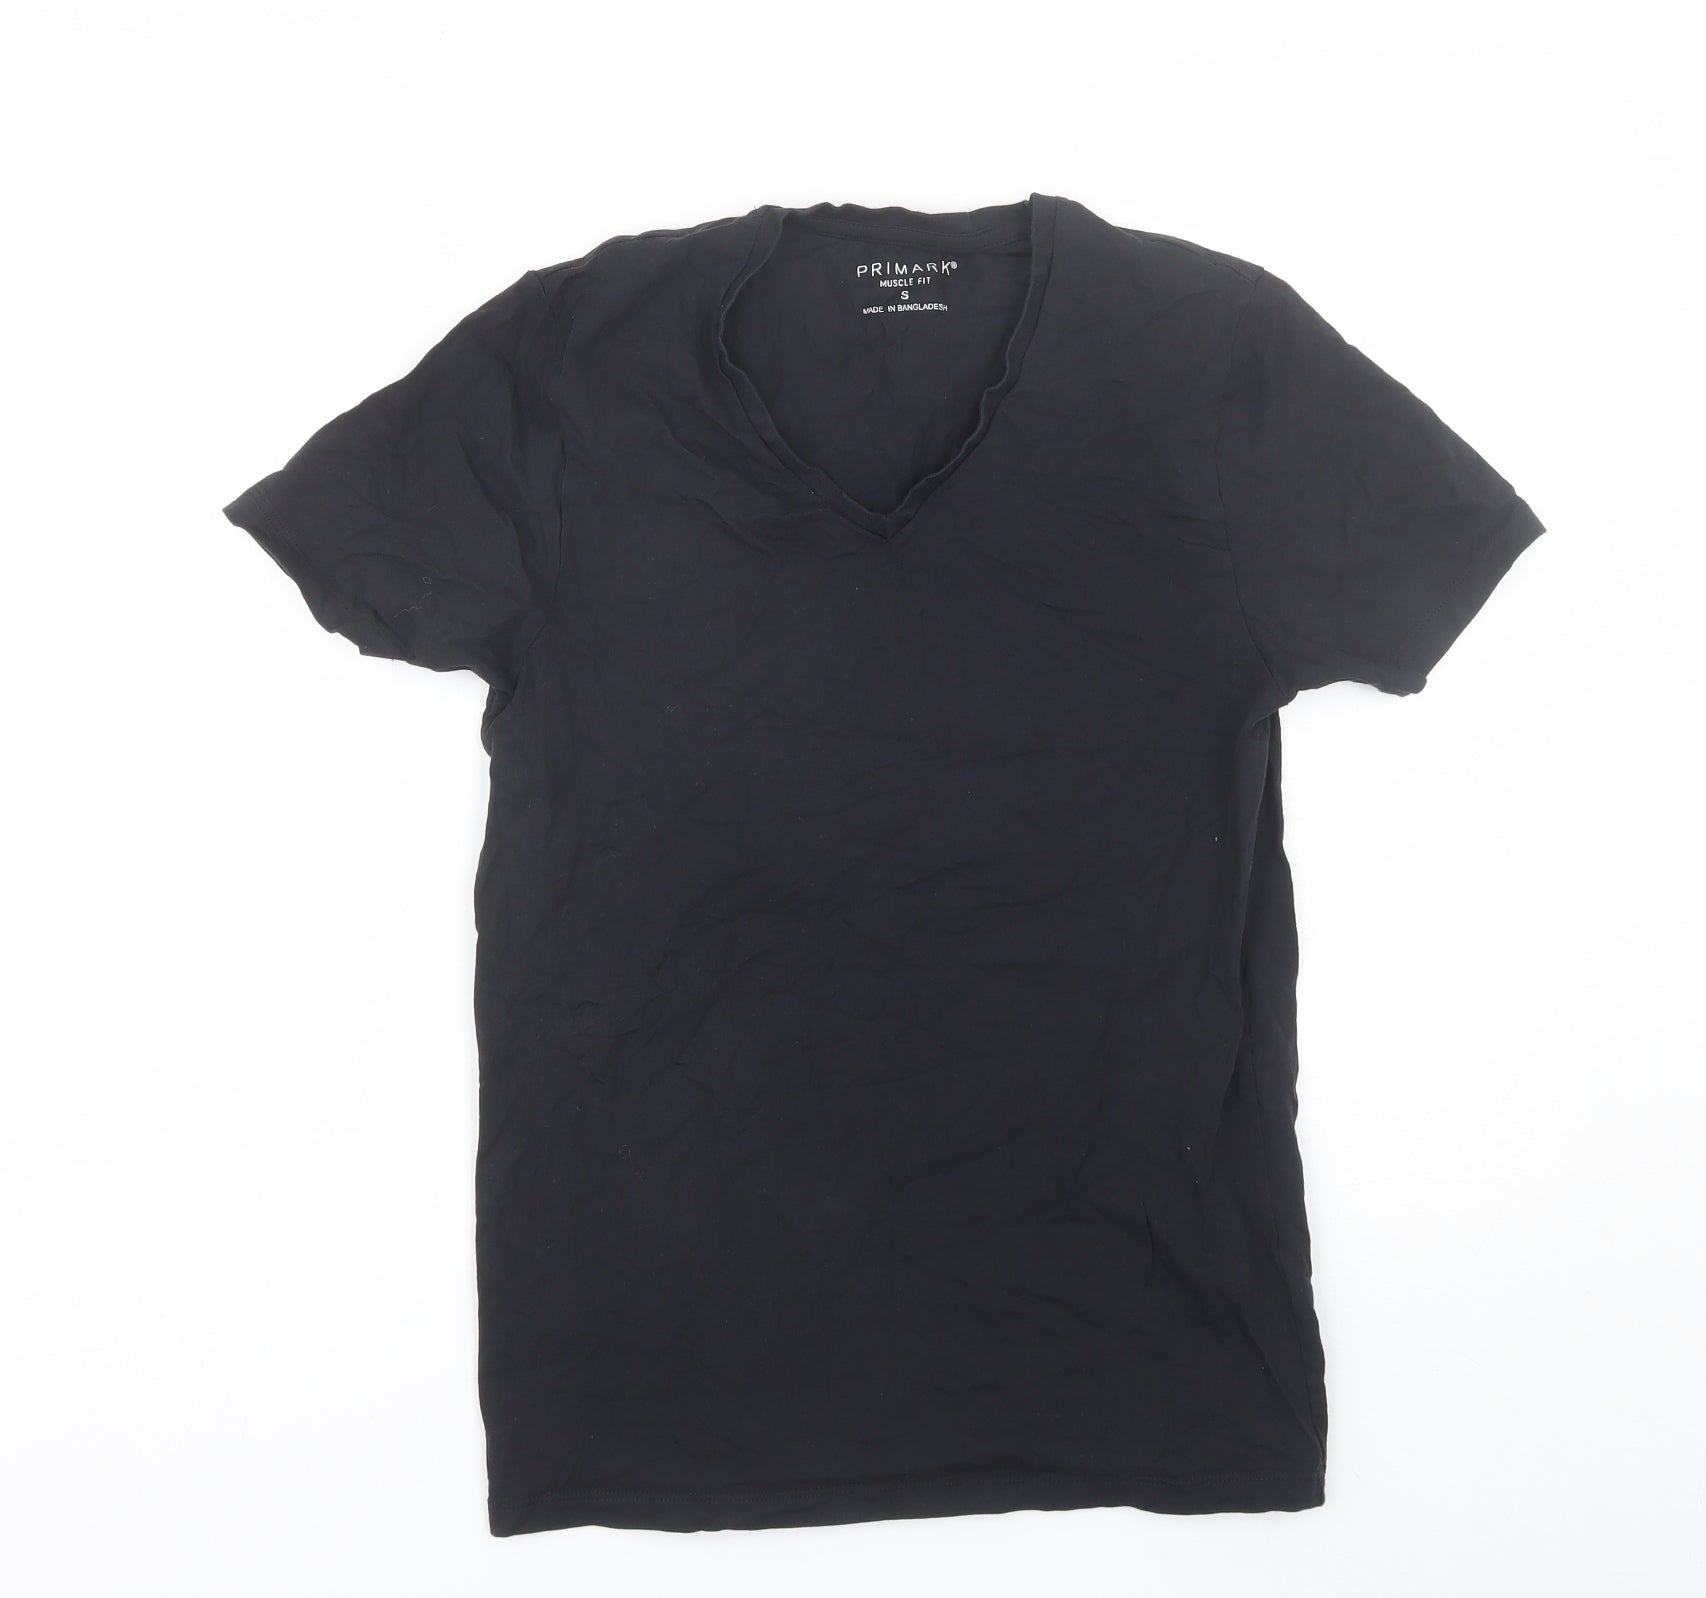 Primark Mens Black T-Shirt Size S V-Neck – Preworn